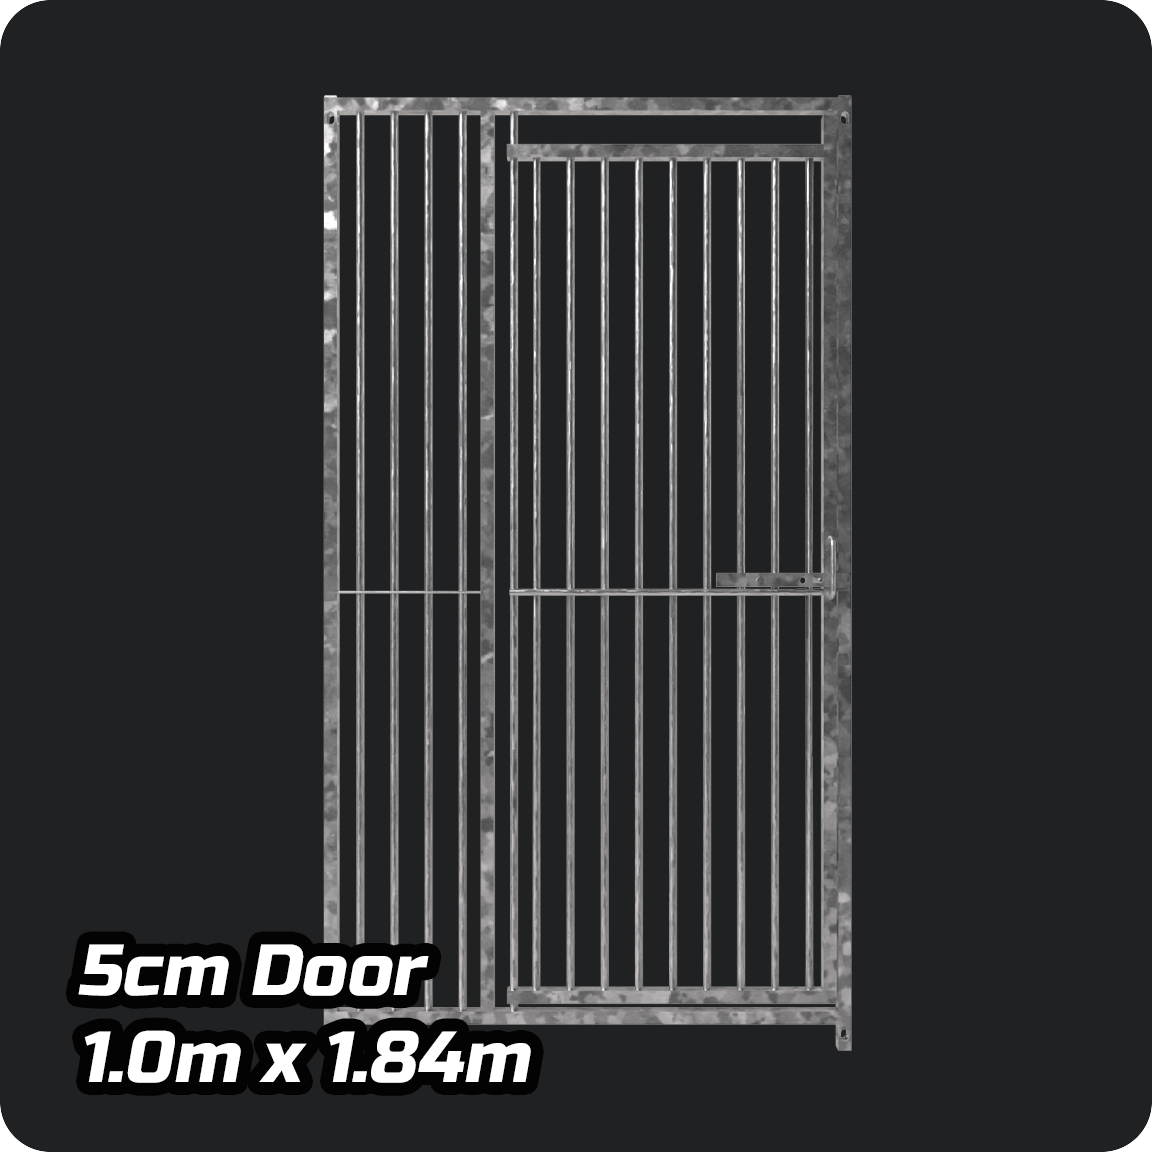 1m x 1.84m DOOR - Heavy duty Premium Galvanized - 5cm Gap Panels